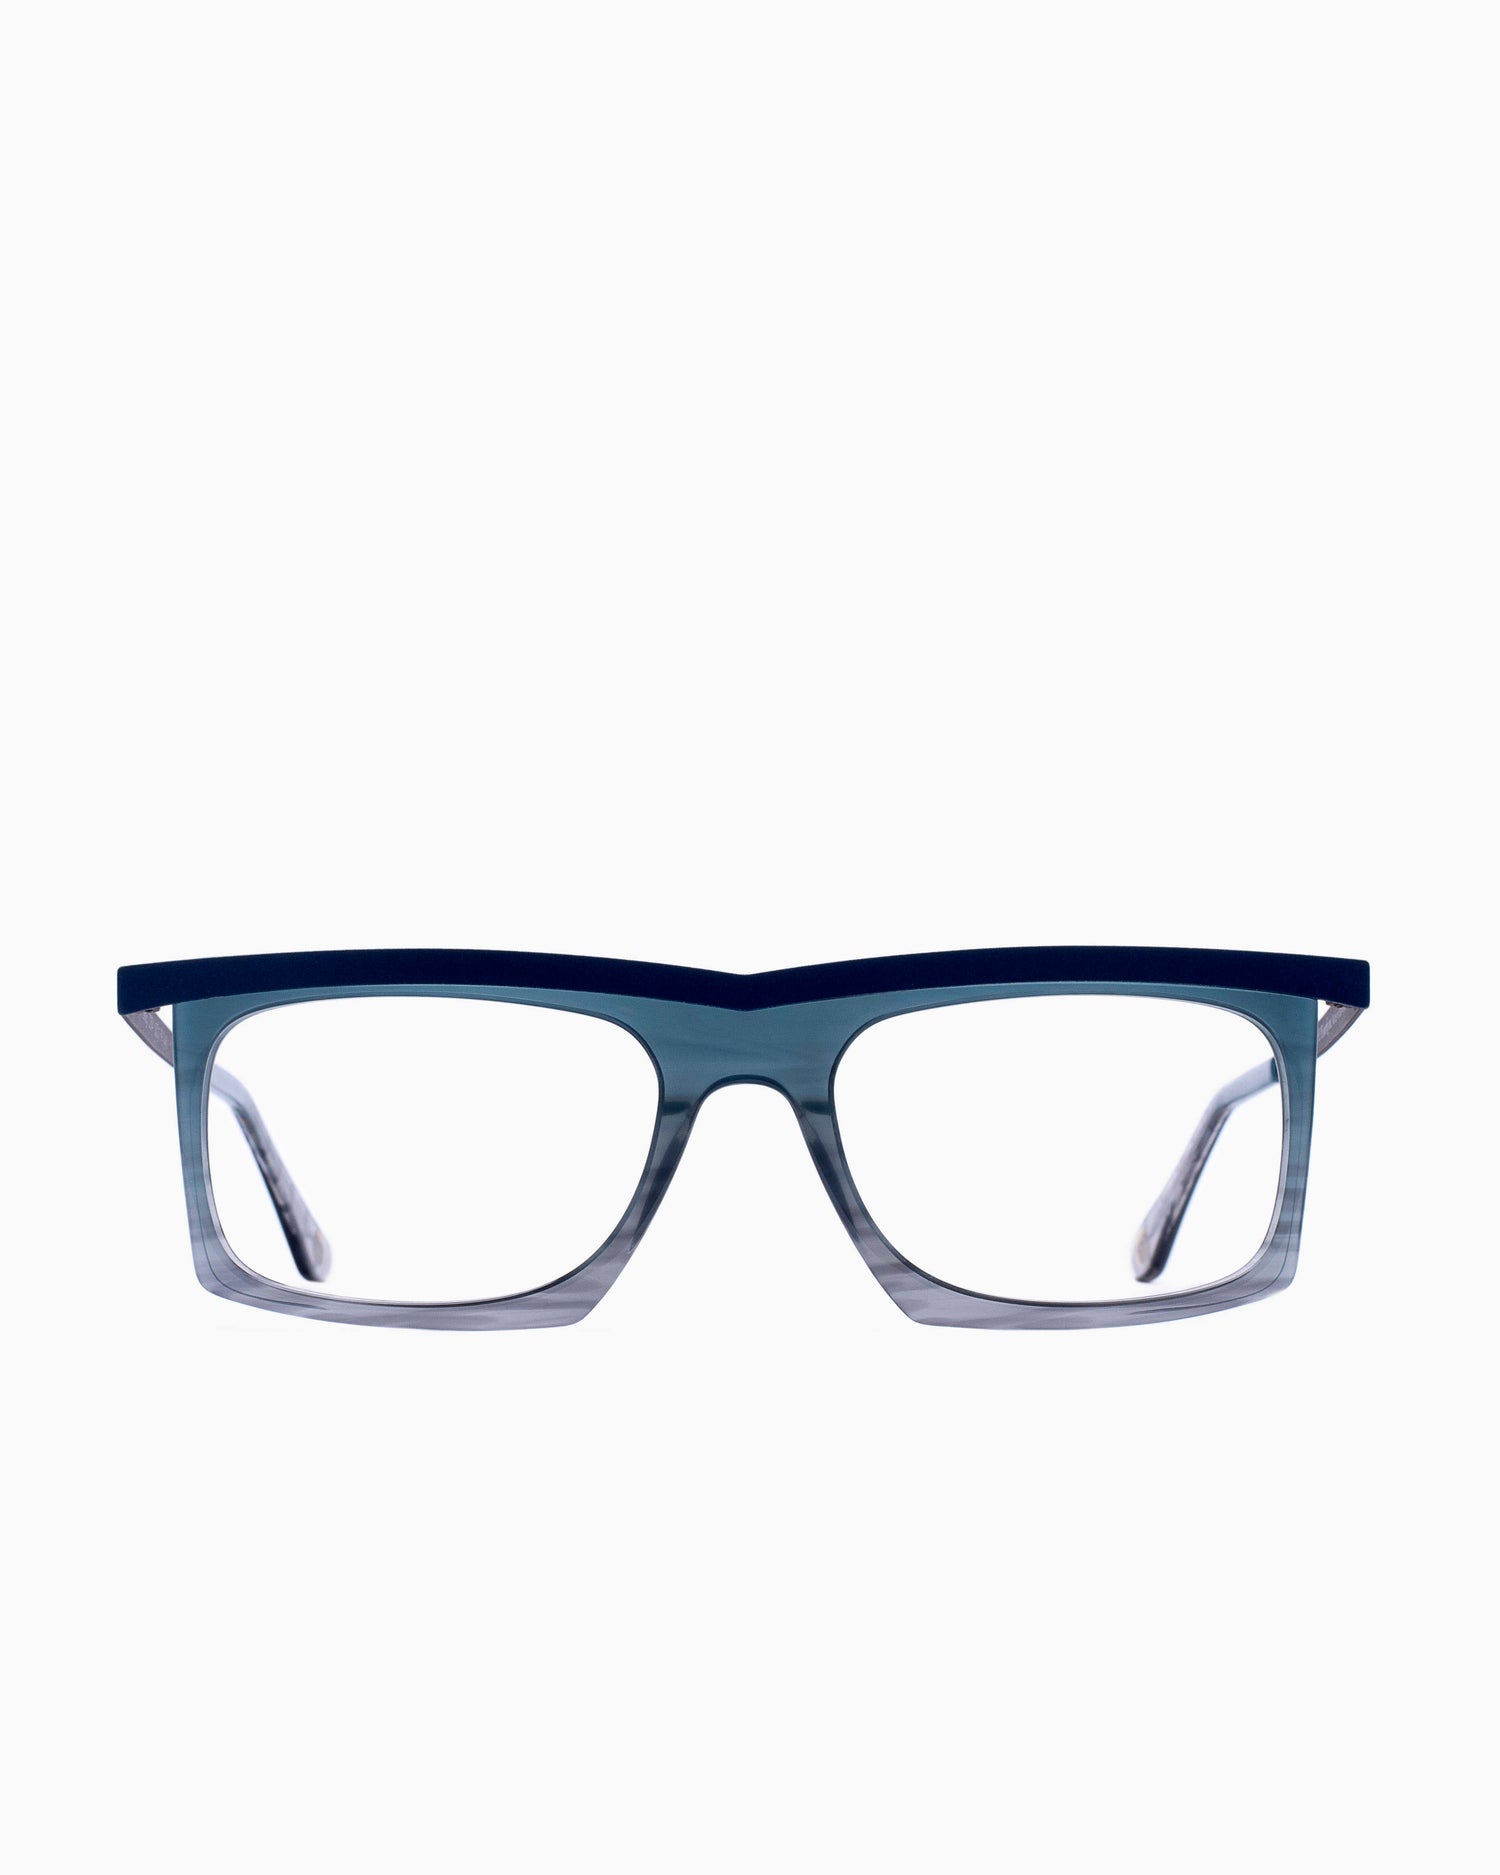 Spectacleeyeworks - Doug - C874 | glasses bar:  Marie-Sophie Dion